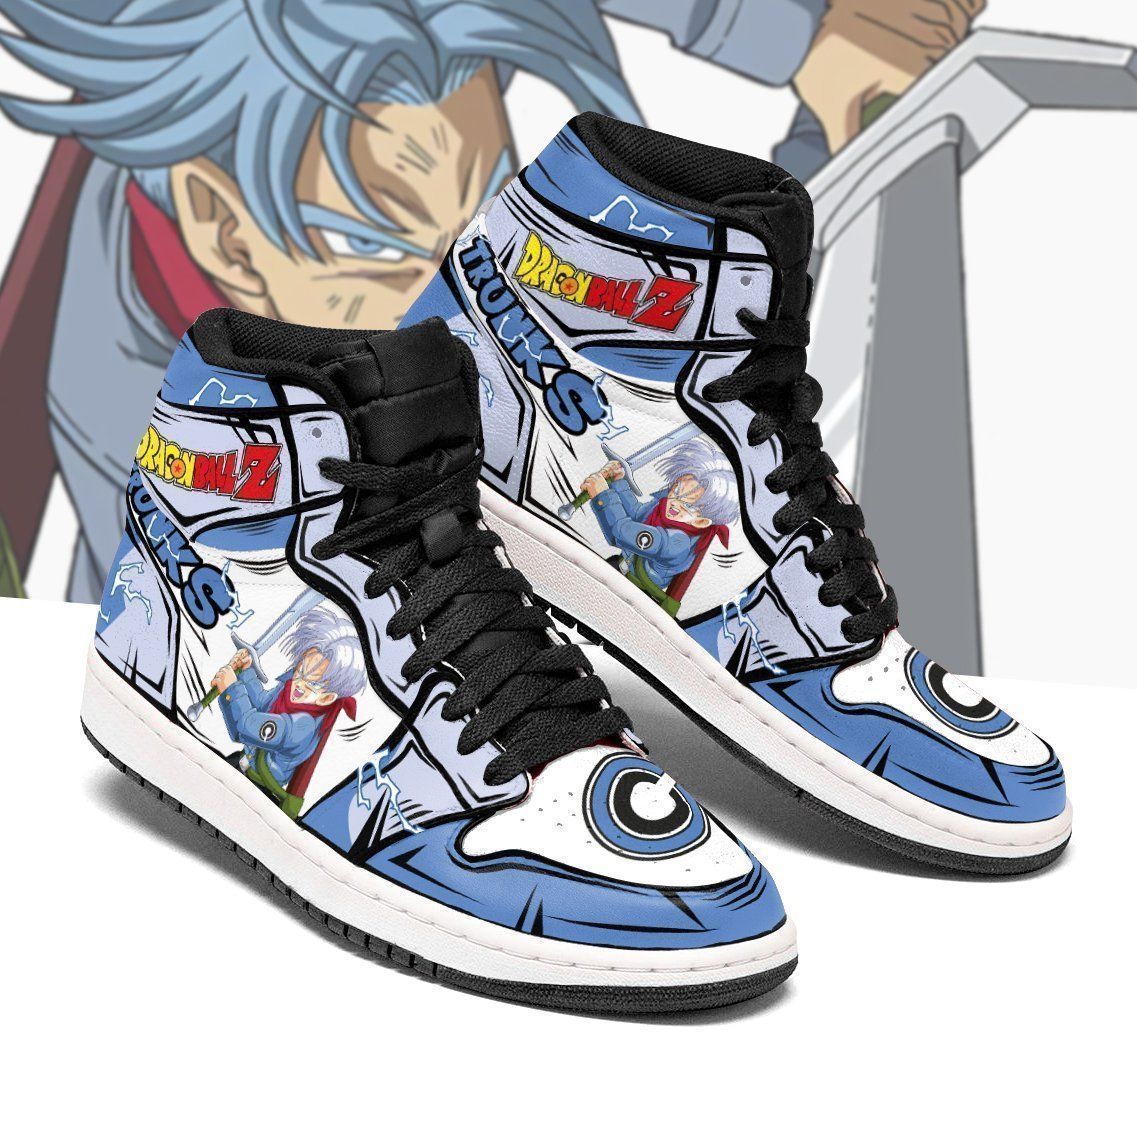 Trunks Dragon Ball Z Anime Sneakers Air Jordan Shoes Sport